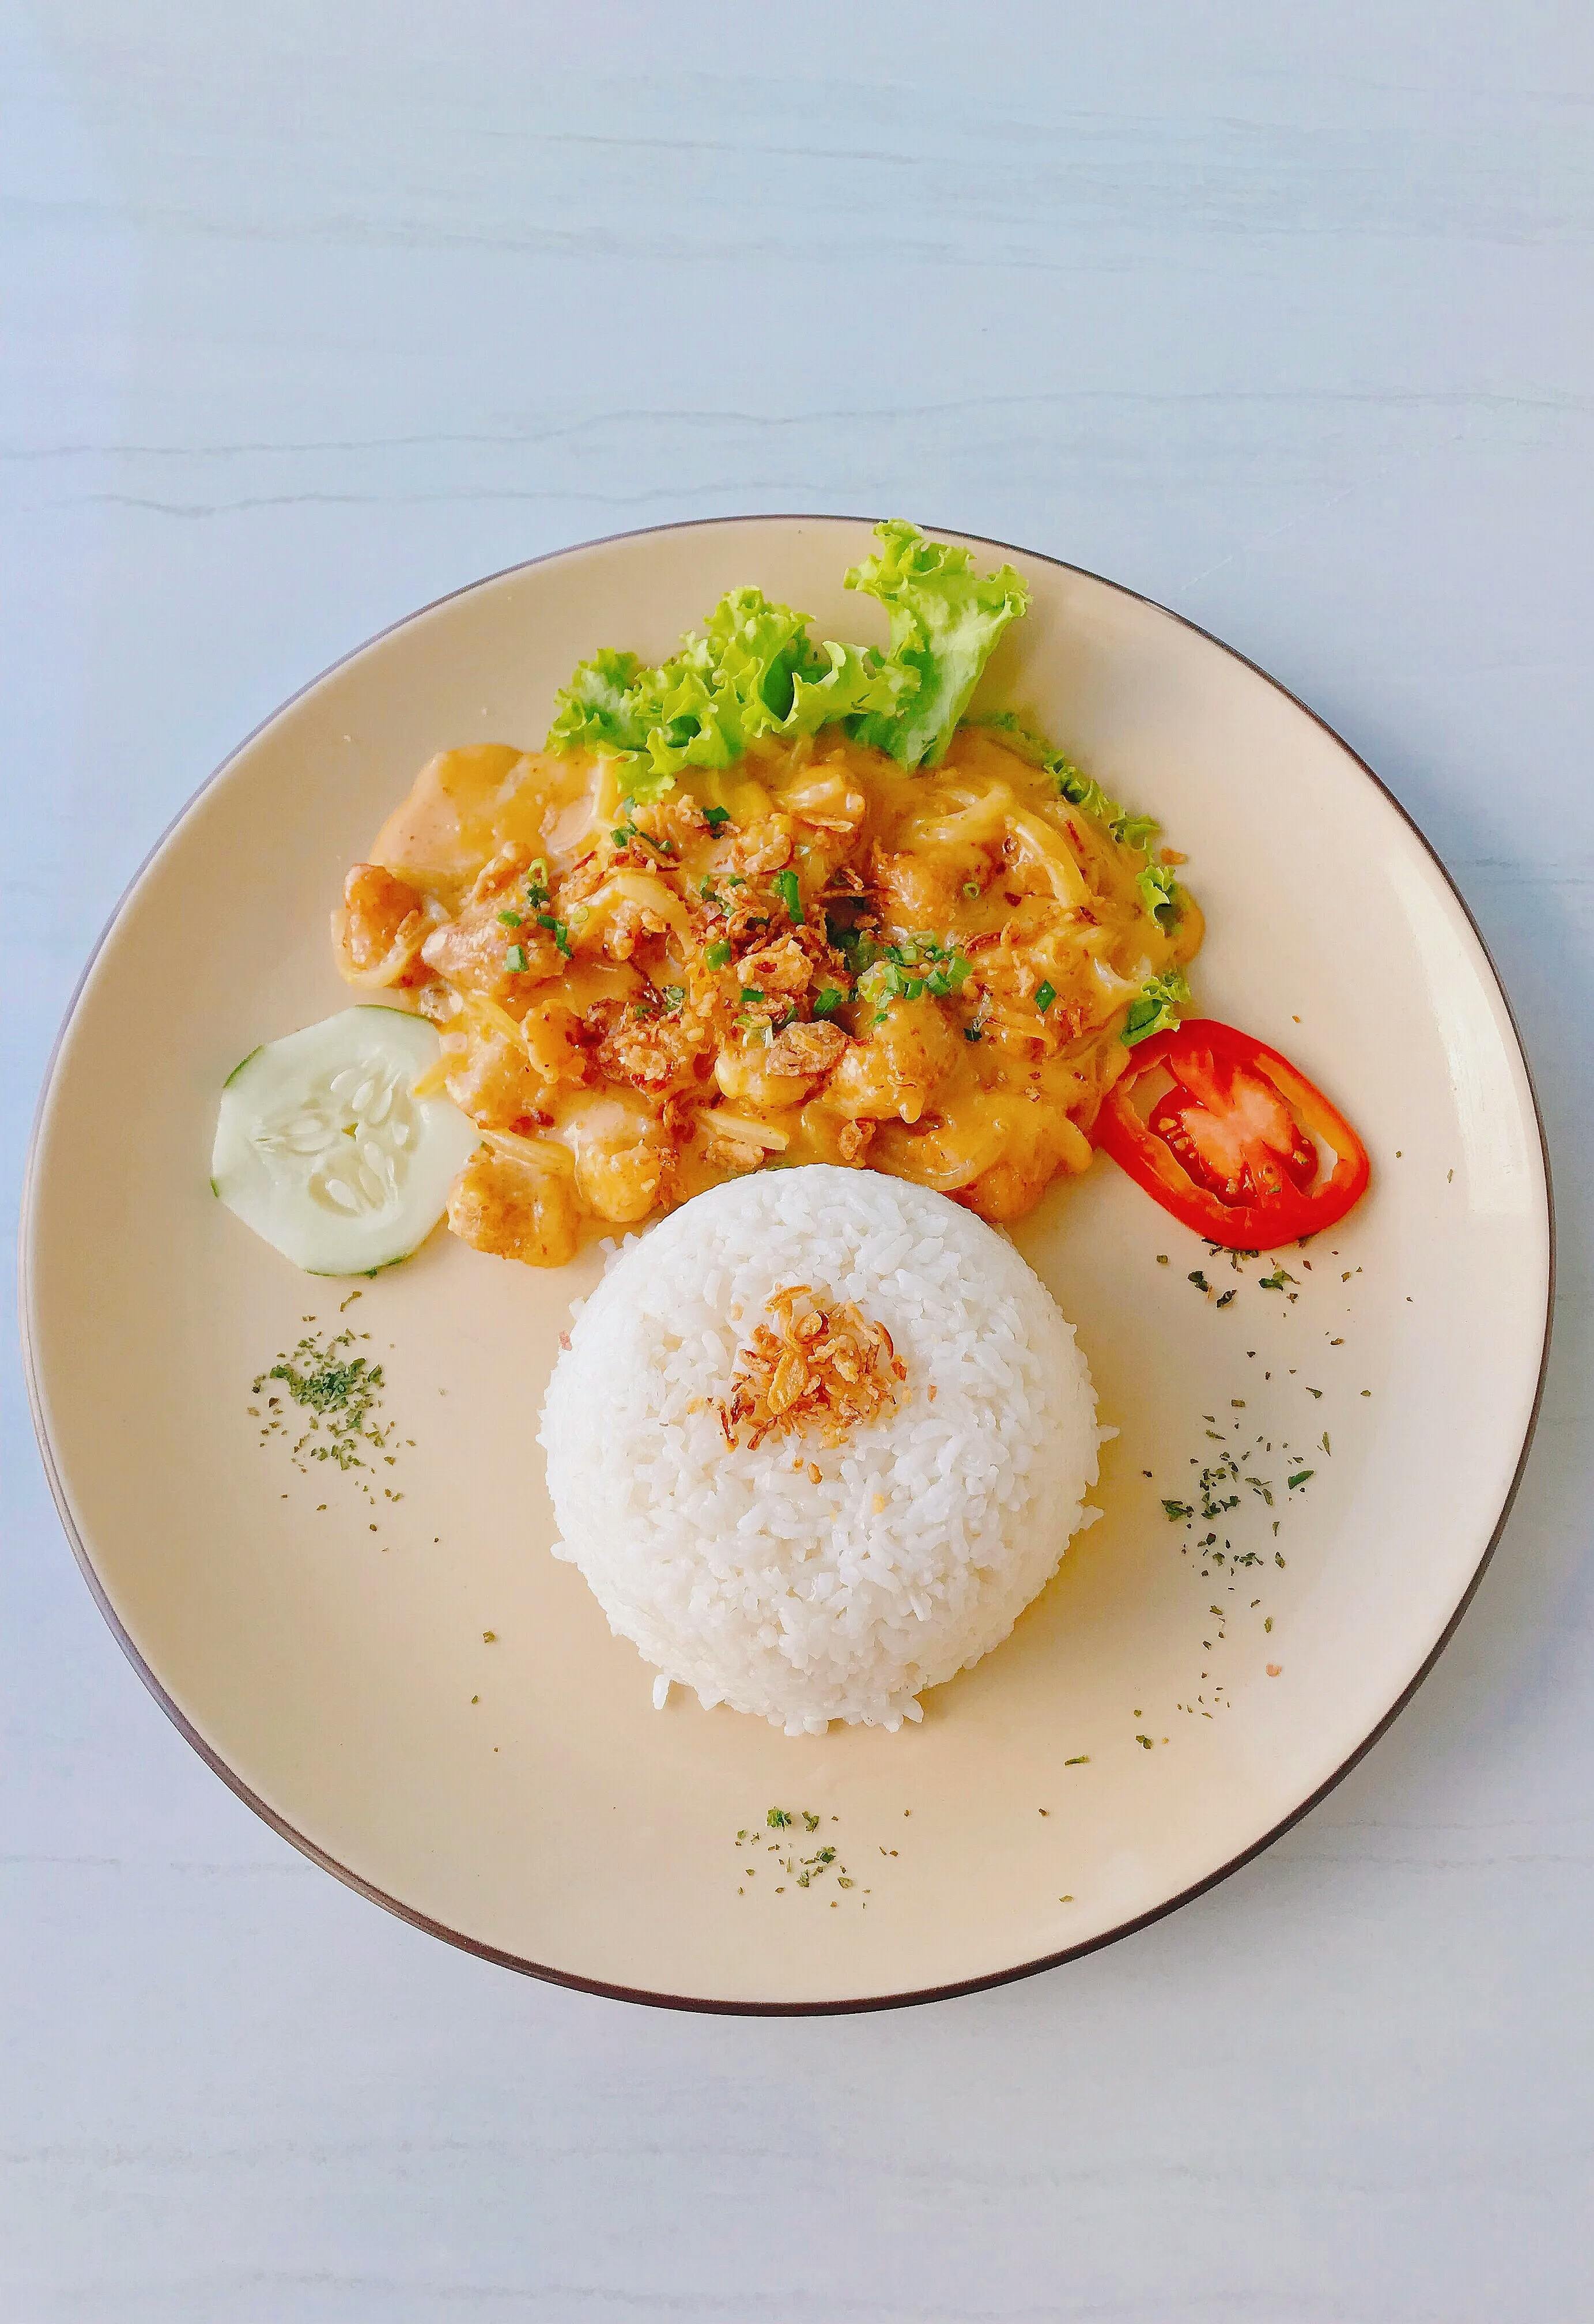 Plate with Nasi Goreng from the Nusantara Indonesian Restaurant